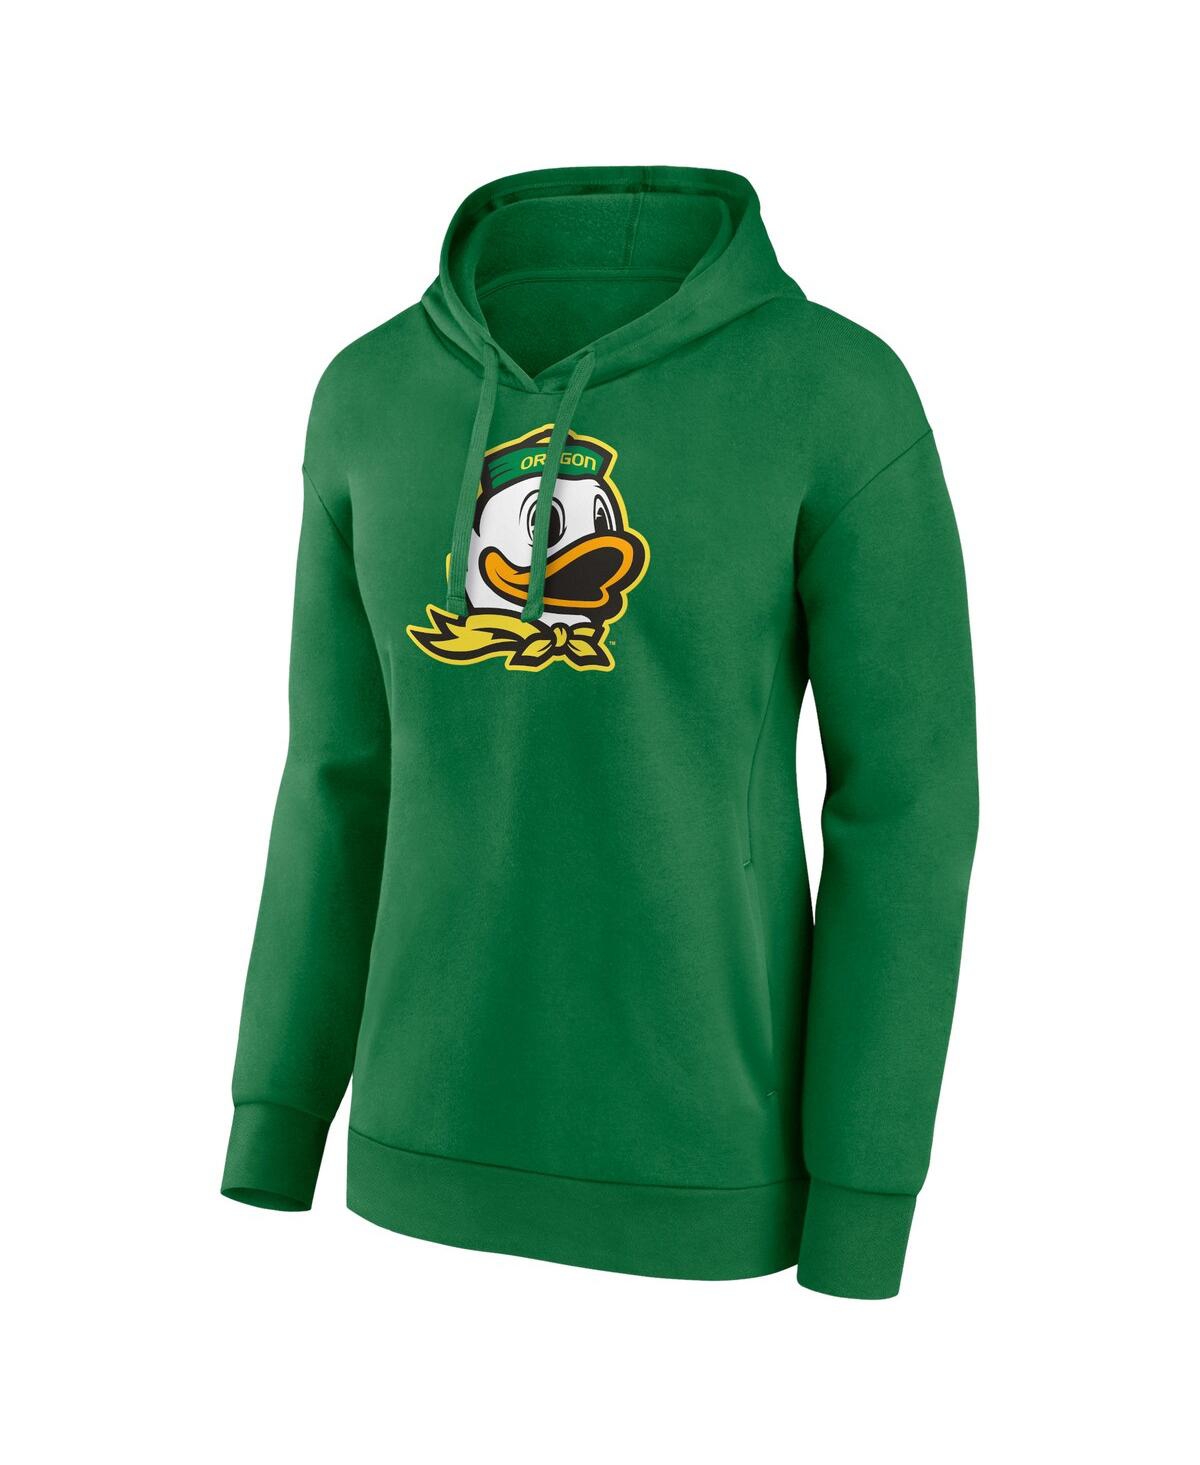 Shop Fanatics Women's  Green Oregon Ducks Evergreen Pullover Hoodie